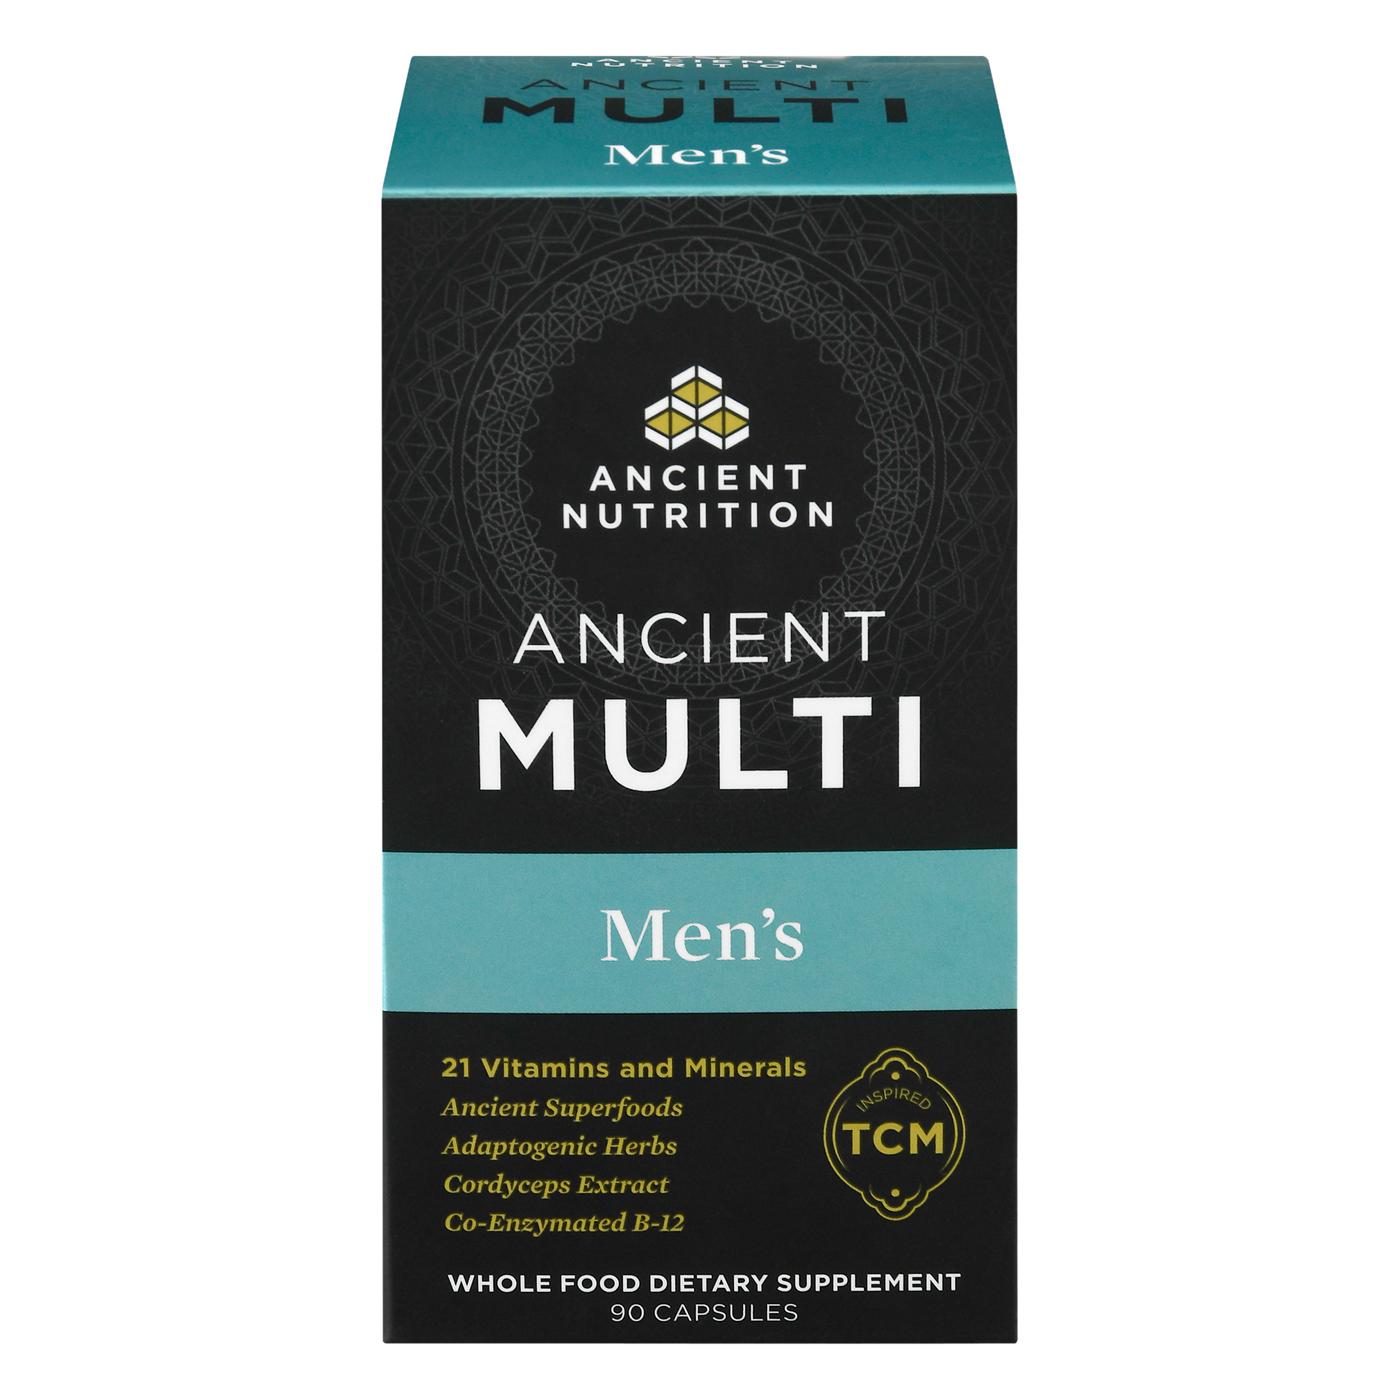 Ancient Nutrition Multi Men's Capsules; image 1 of 2